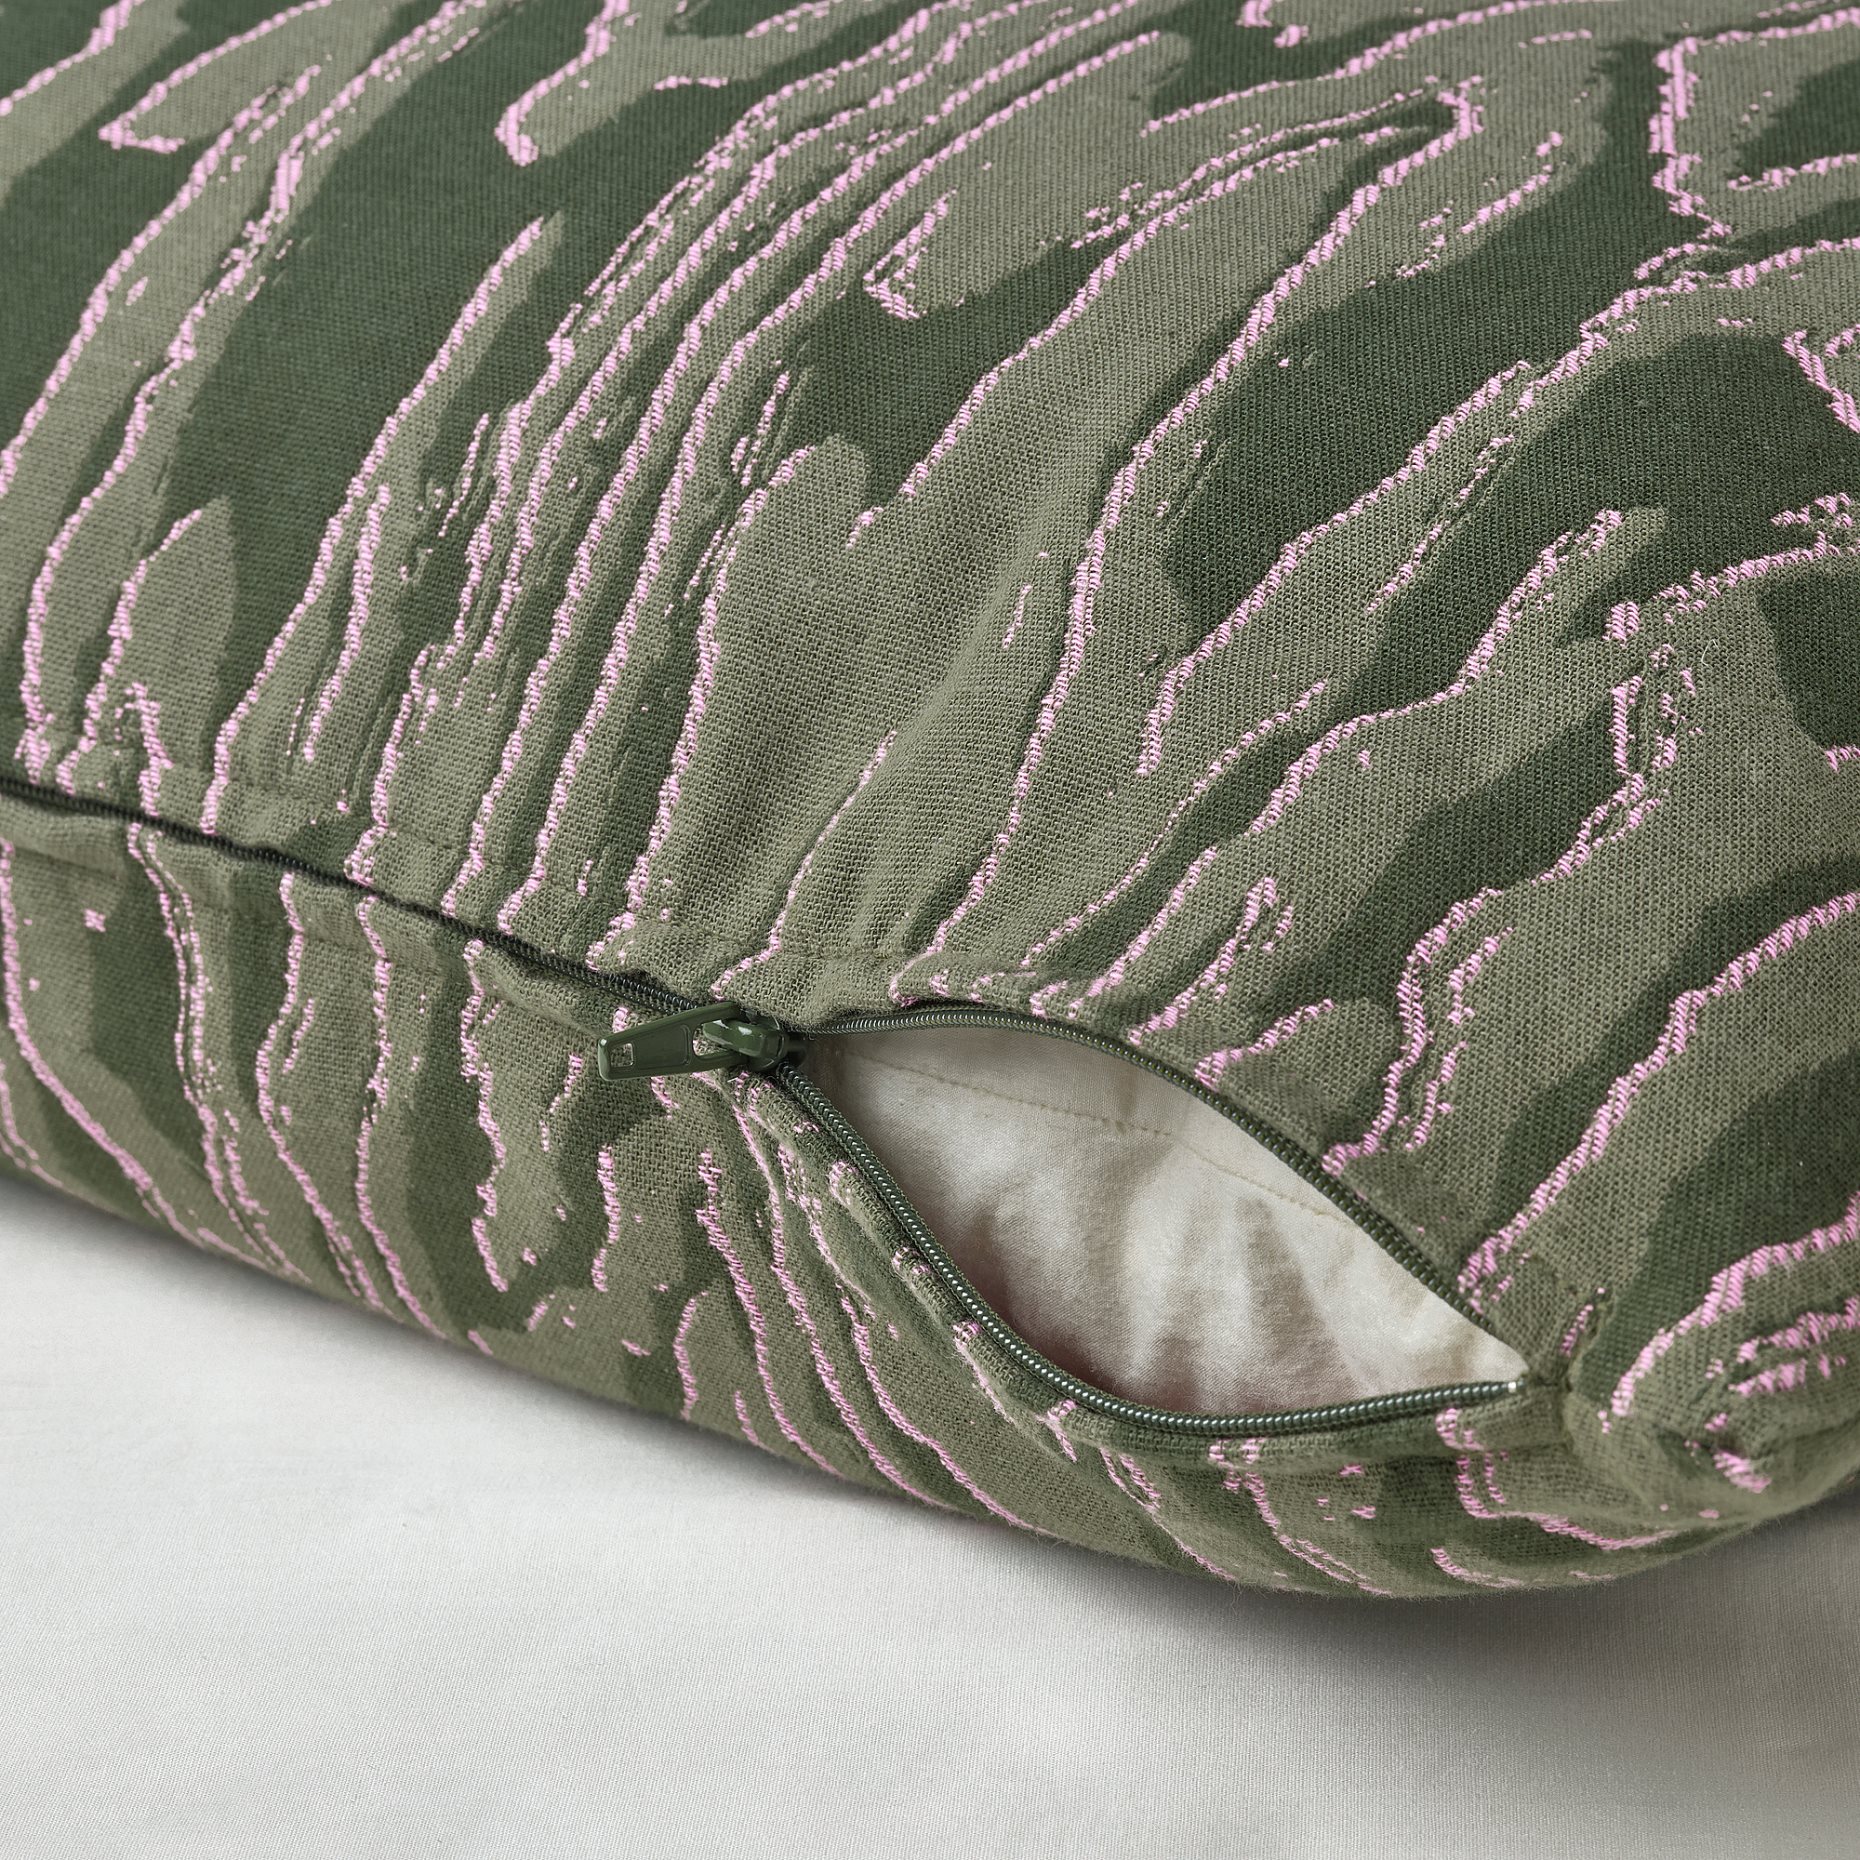 TANDMOTT, cushion cover, 50x50 cm, 405.715.02